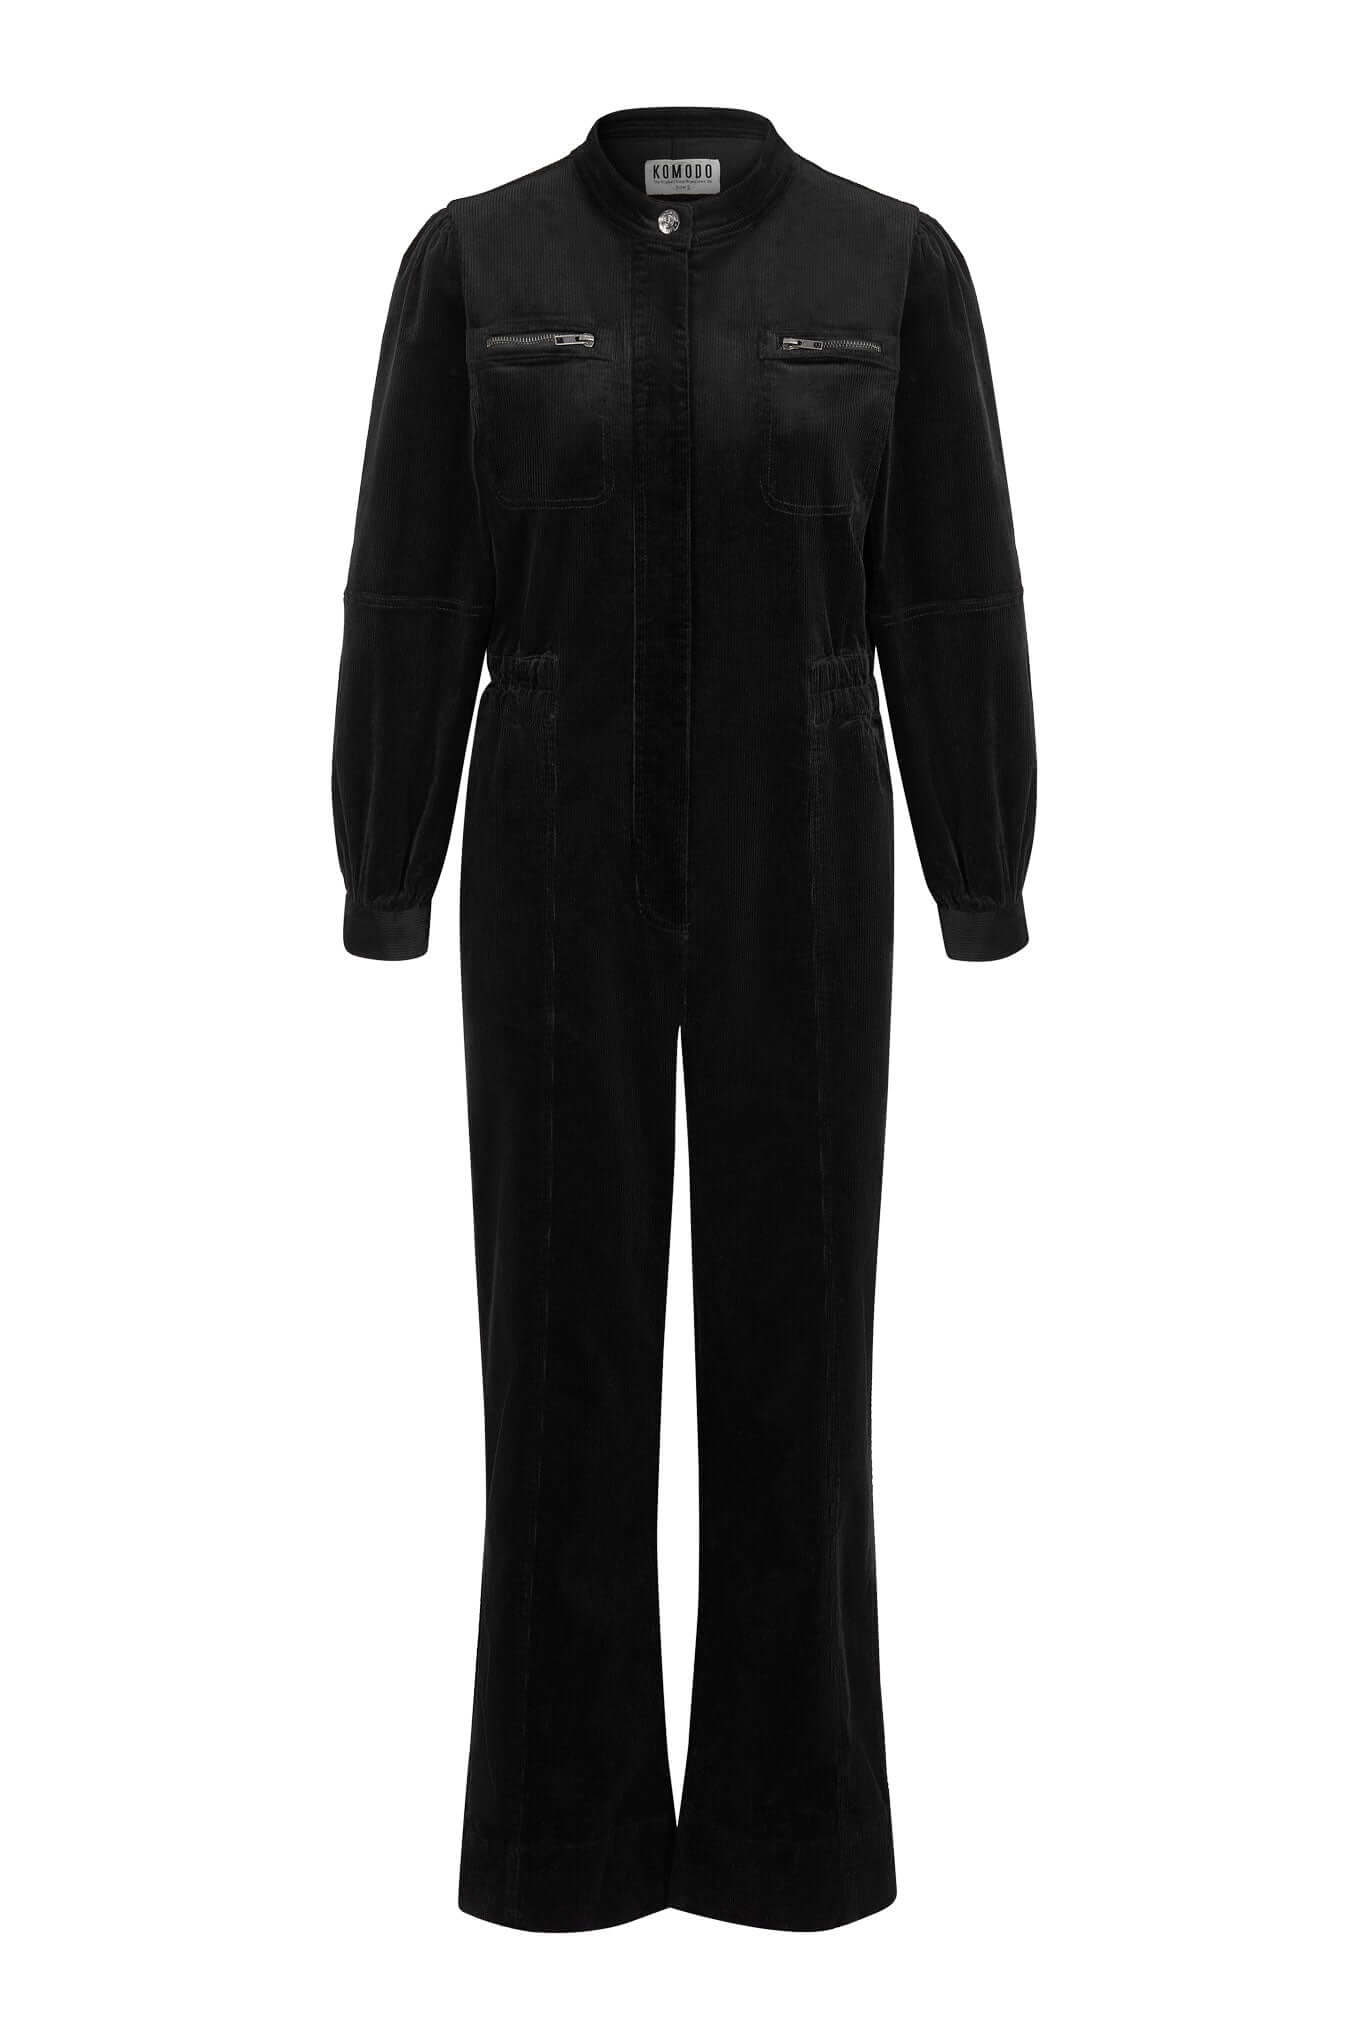 Black jumpsuit KAWA made of organic cotton by Komodo